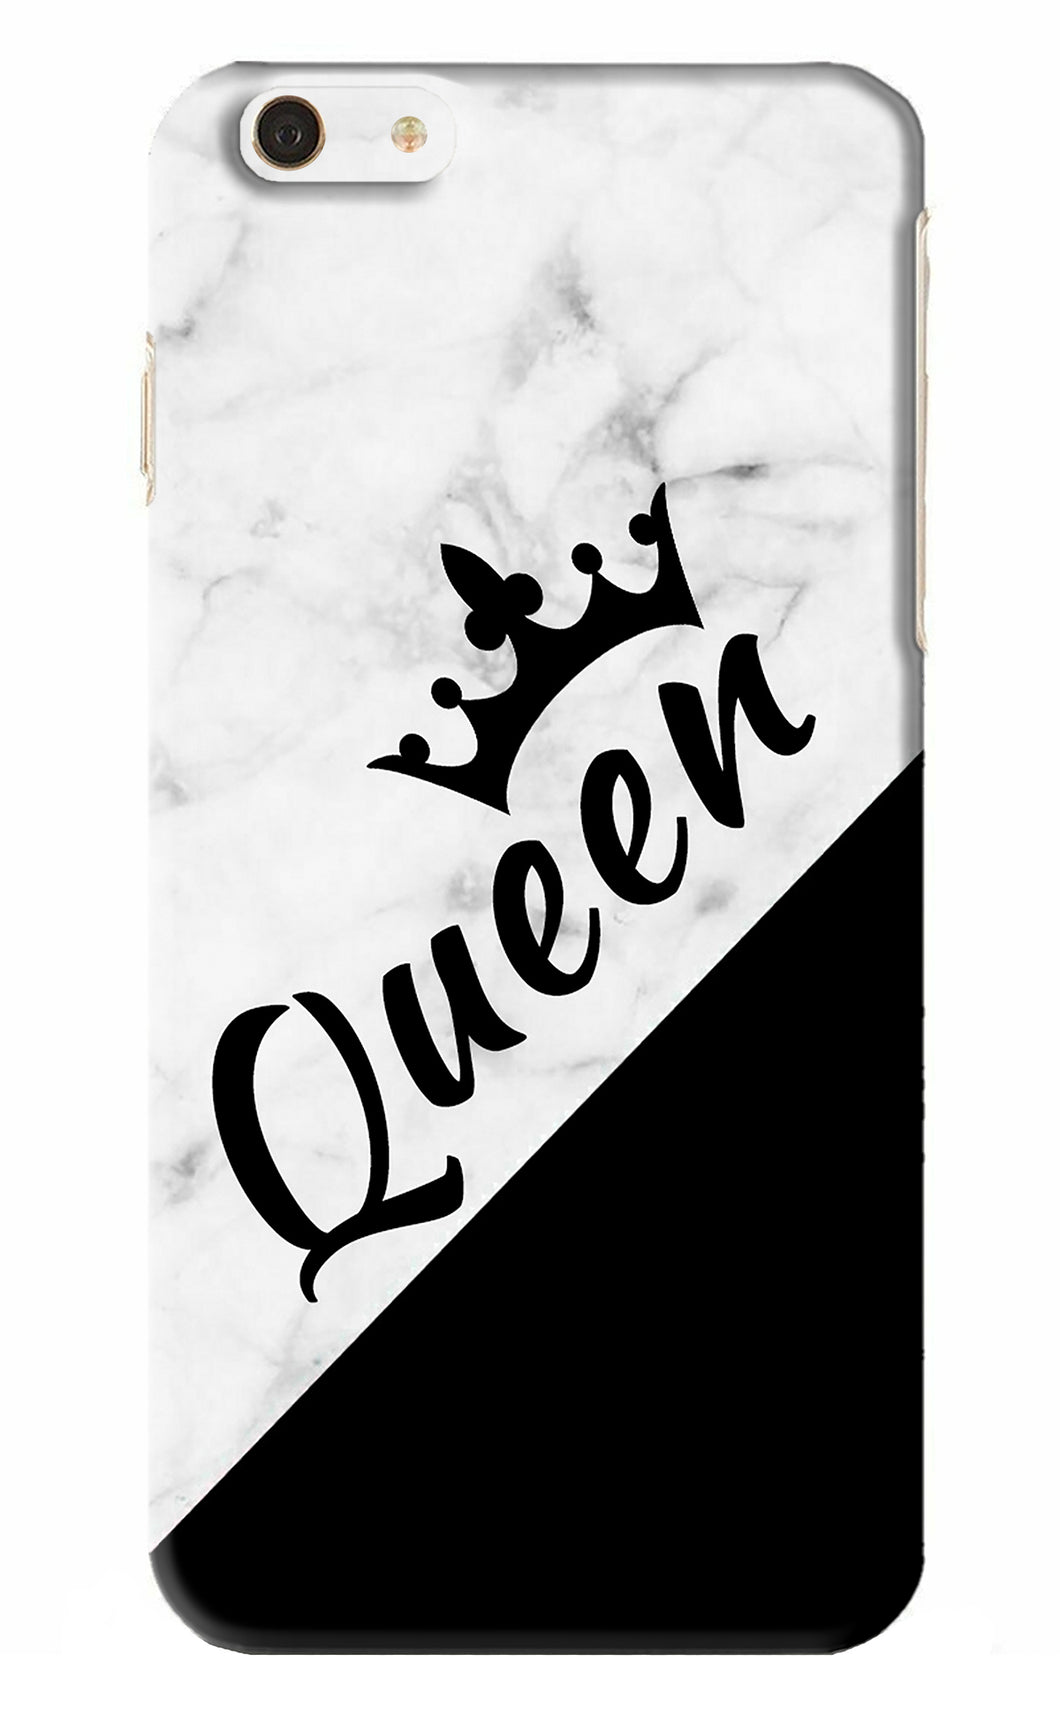 Queen iPhone 6 Plus Back Skin Wrap